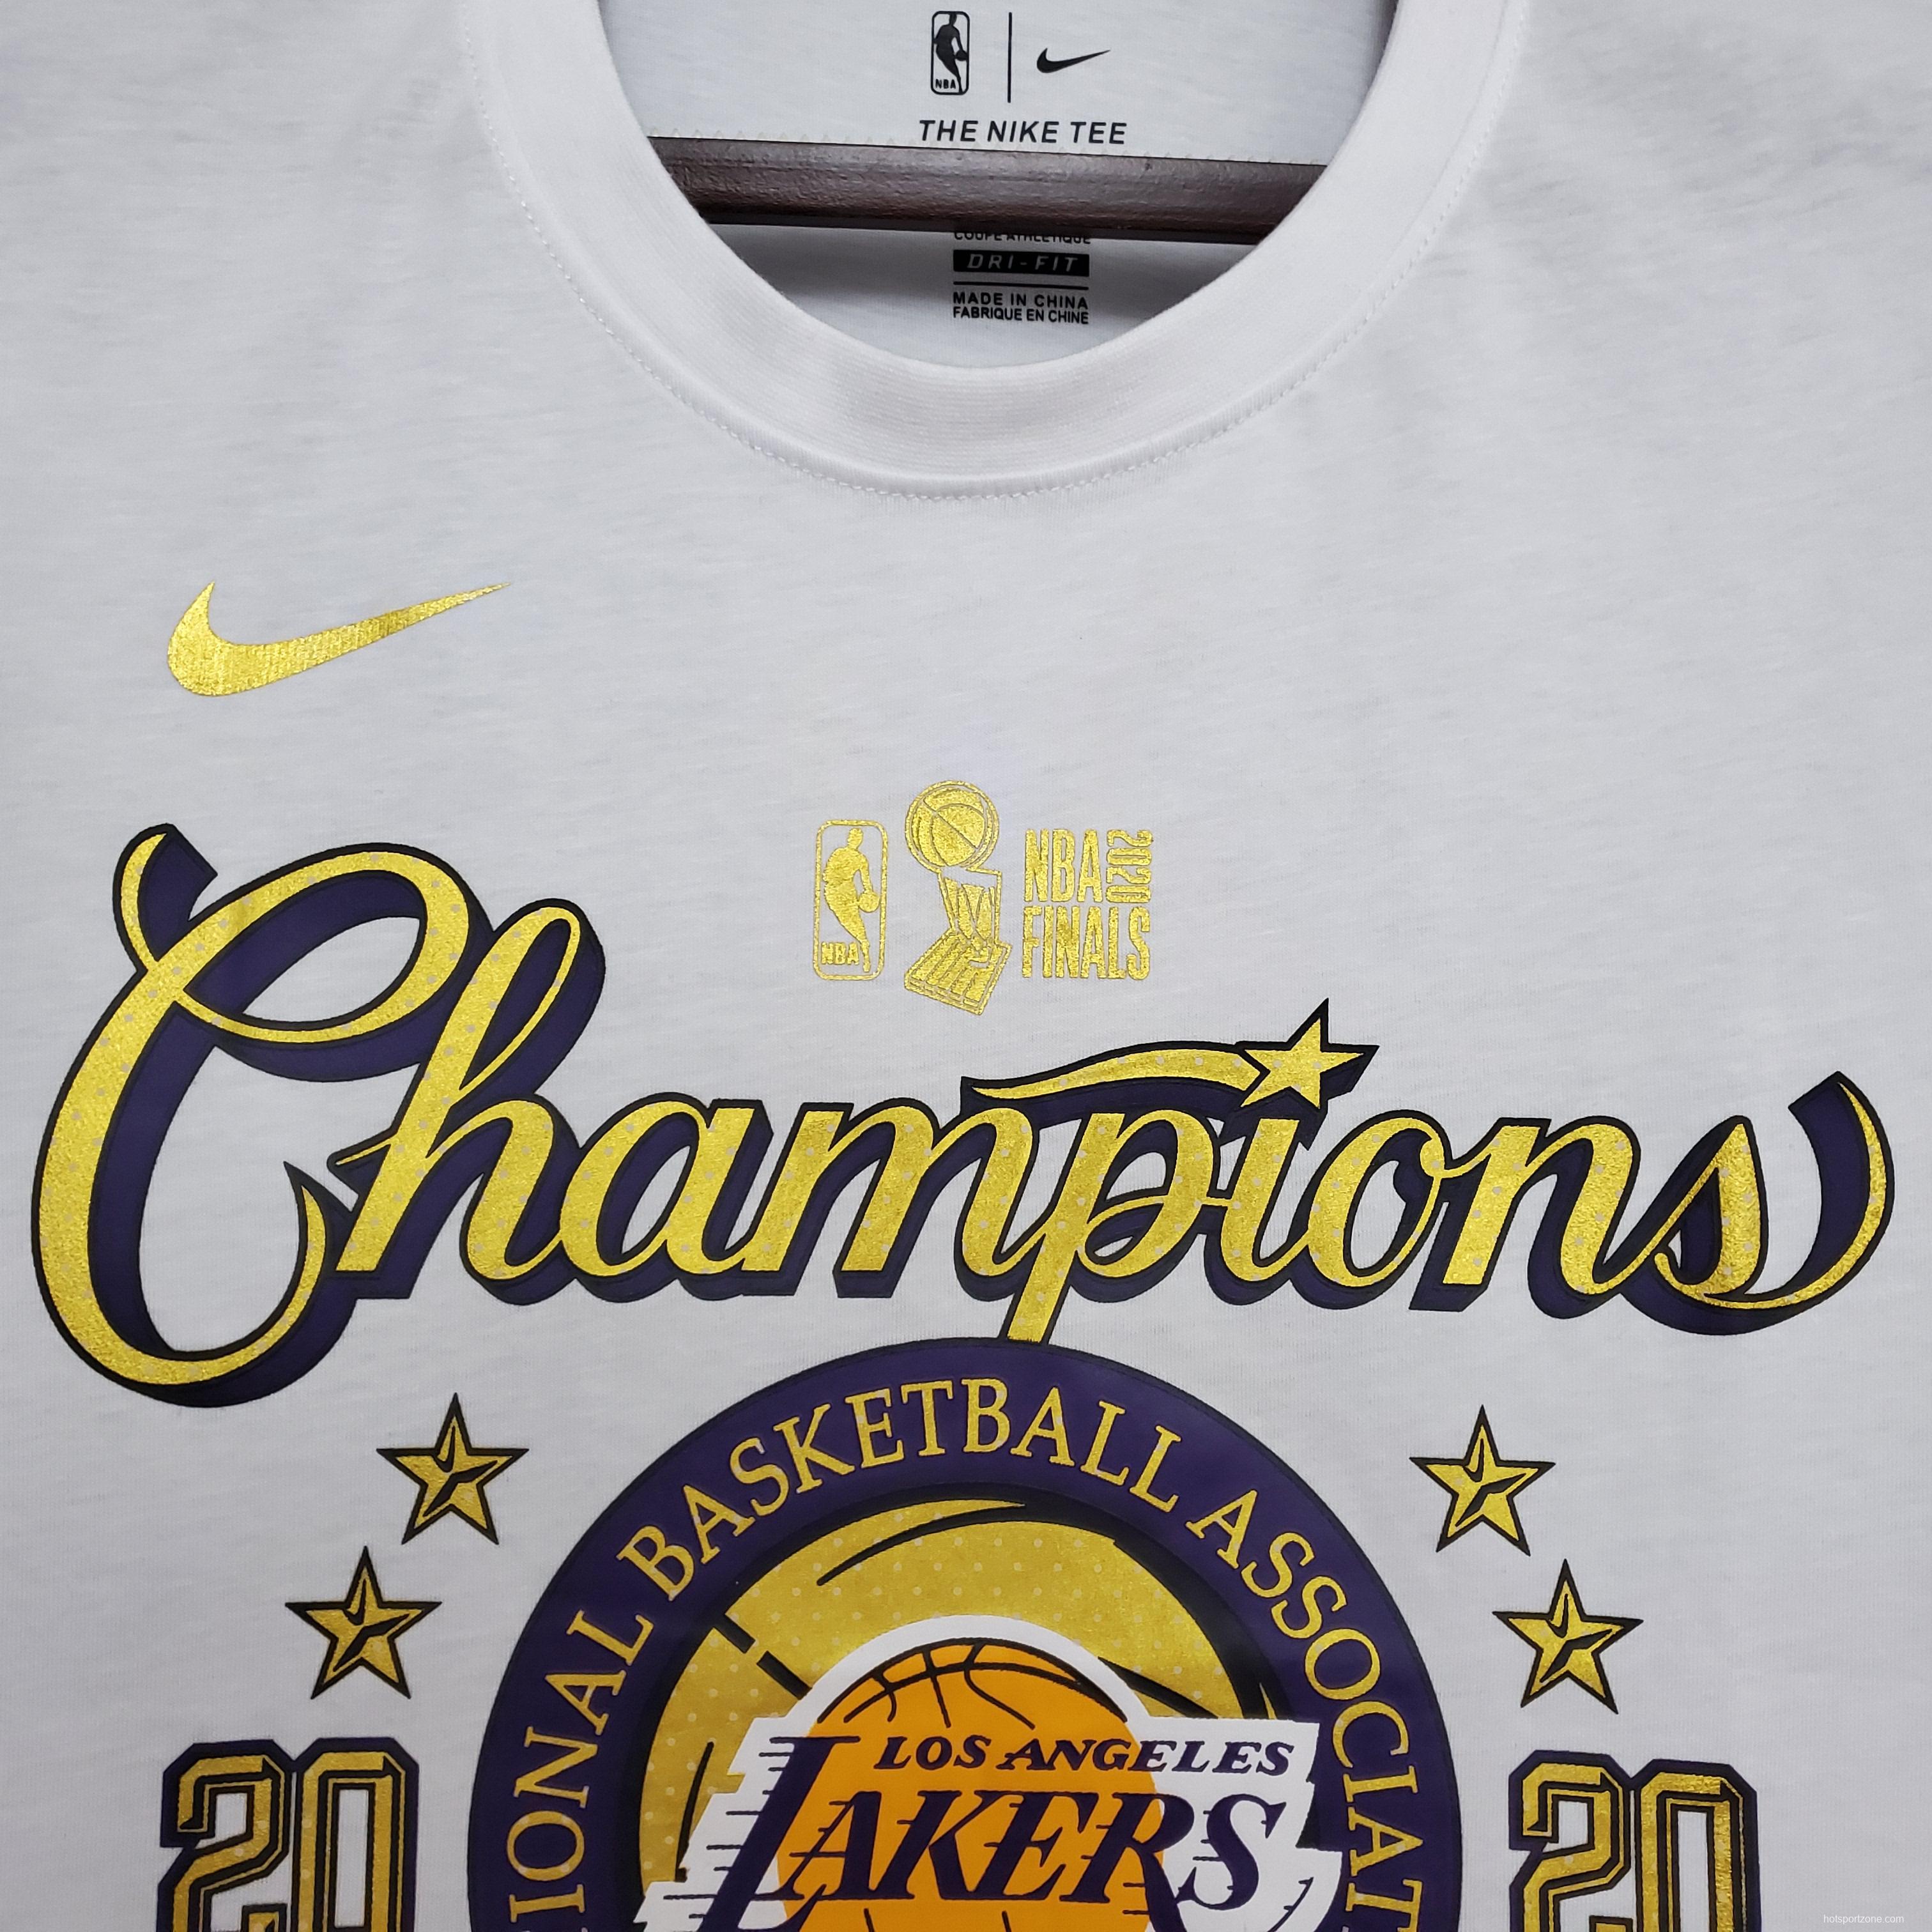 Lakers championship shirt white